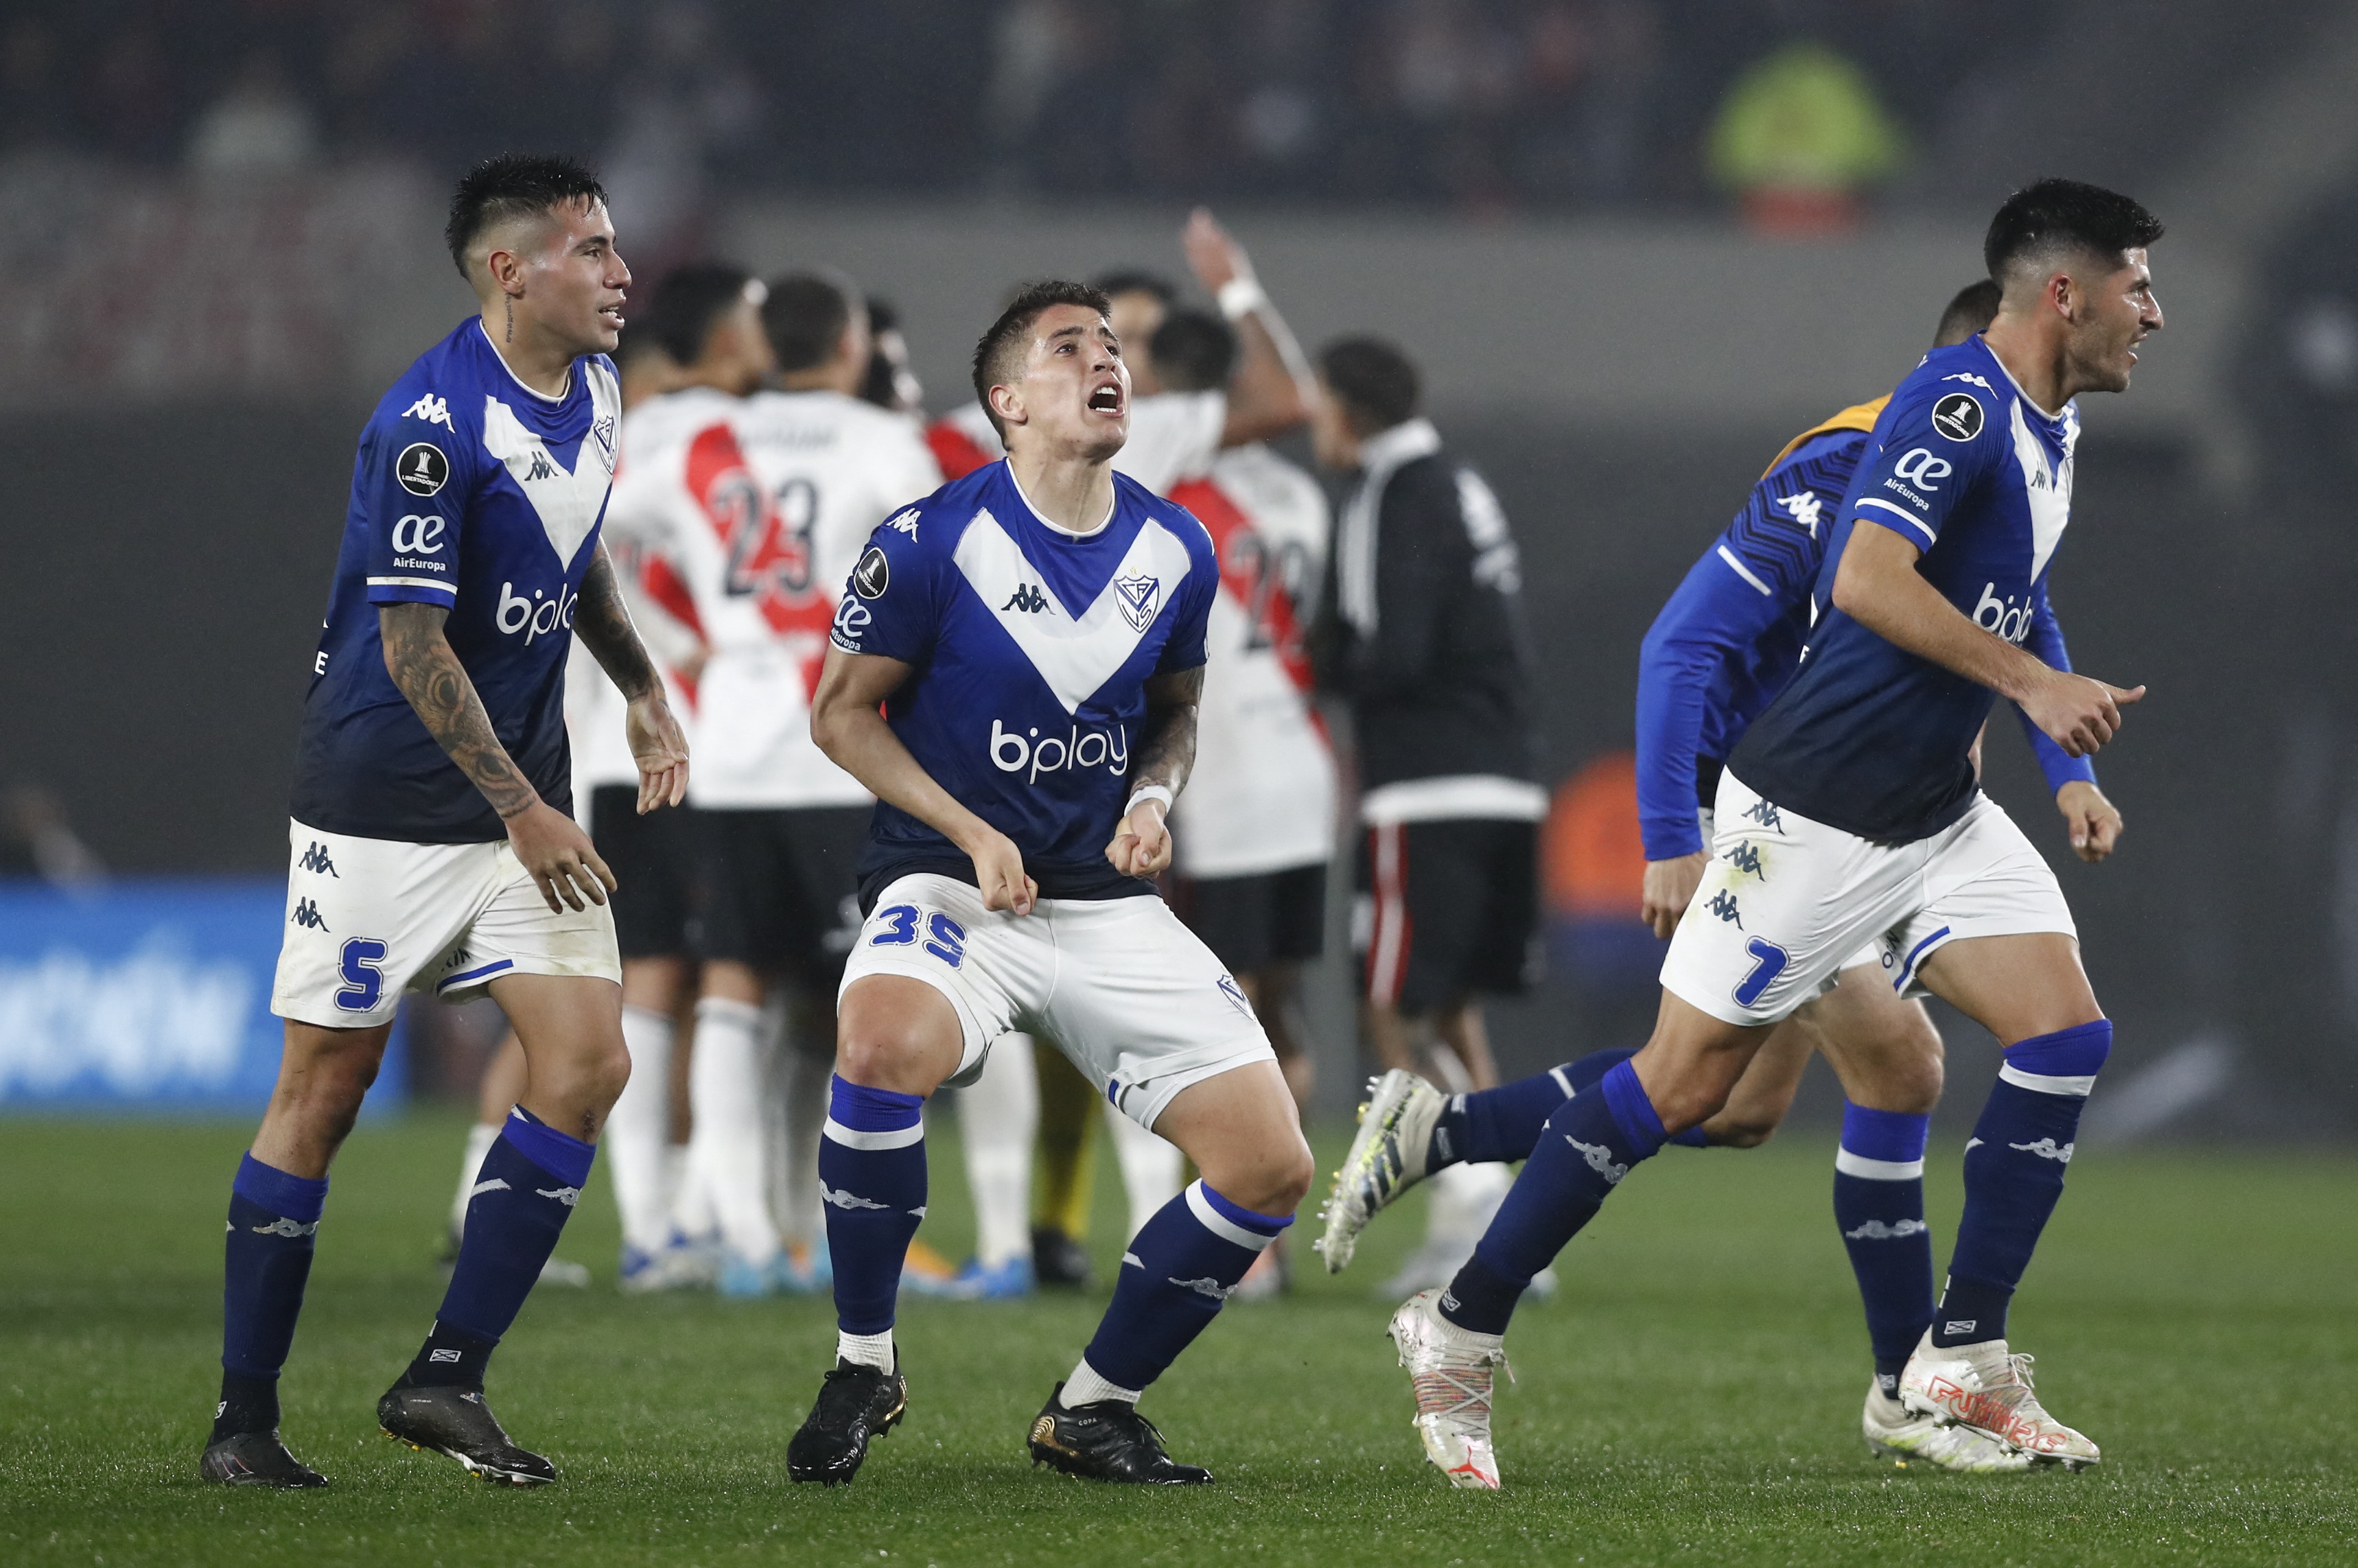 En un partido cargado de polémica, Vélez eliminó a River Plate y avanzó a  los cuartos de final de la Copa Libertadores - Infobae